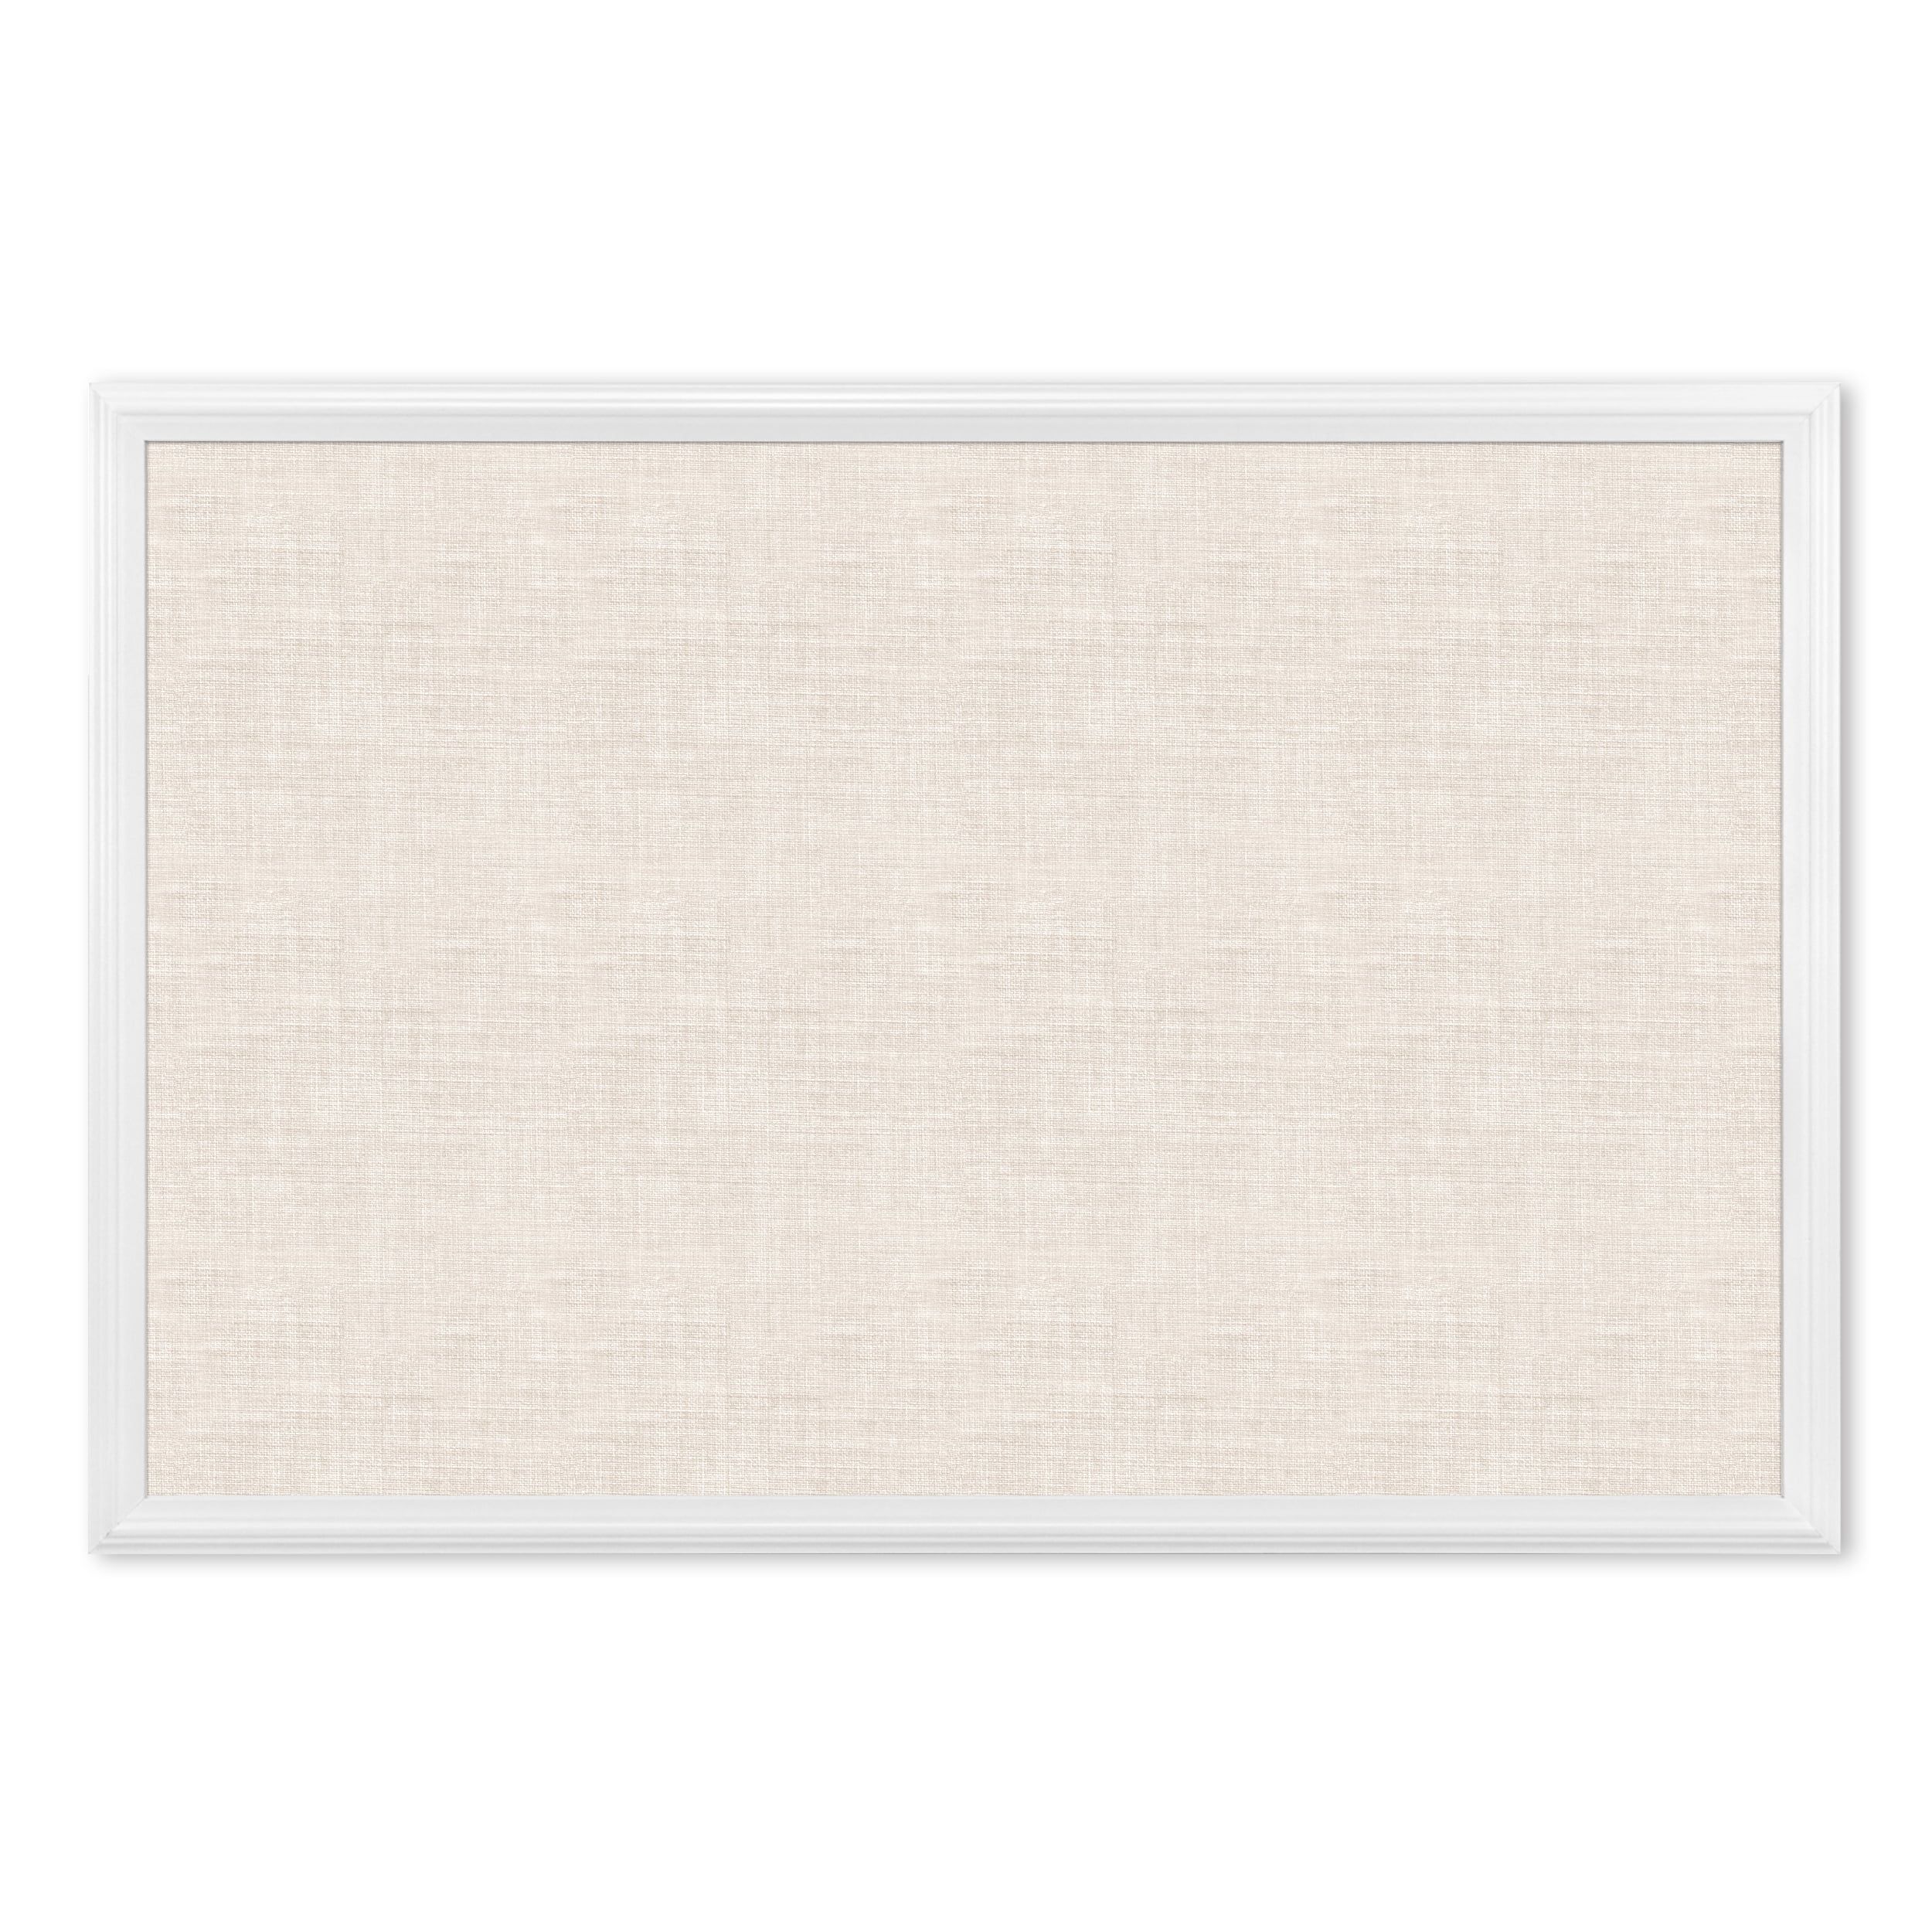 U Brands Linen Bulletin Board, 30" x 20", Natural Linen, White MDF Decor Frame, 2074U | Walmart (US)